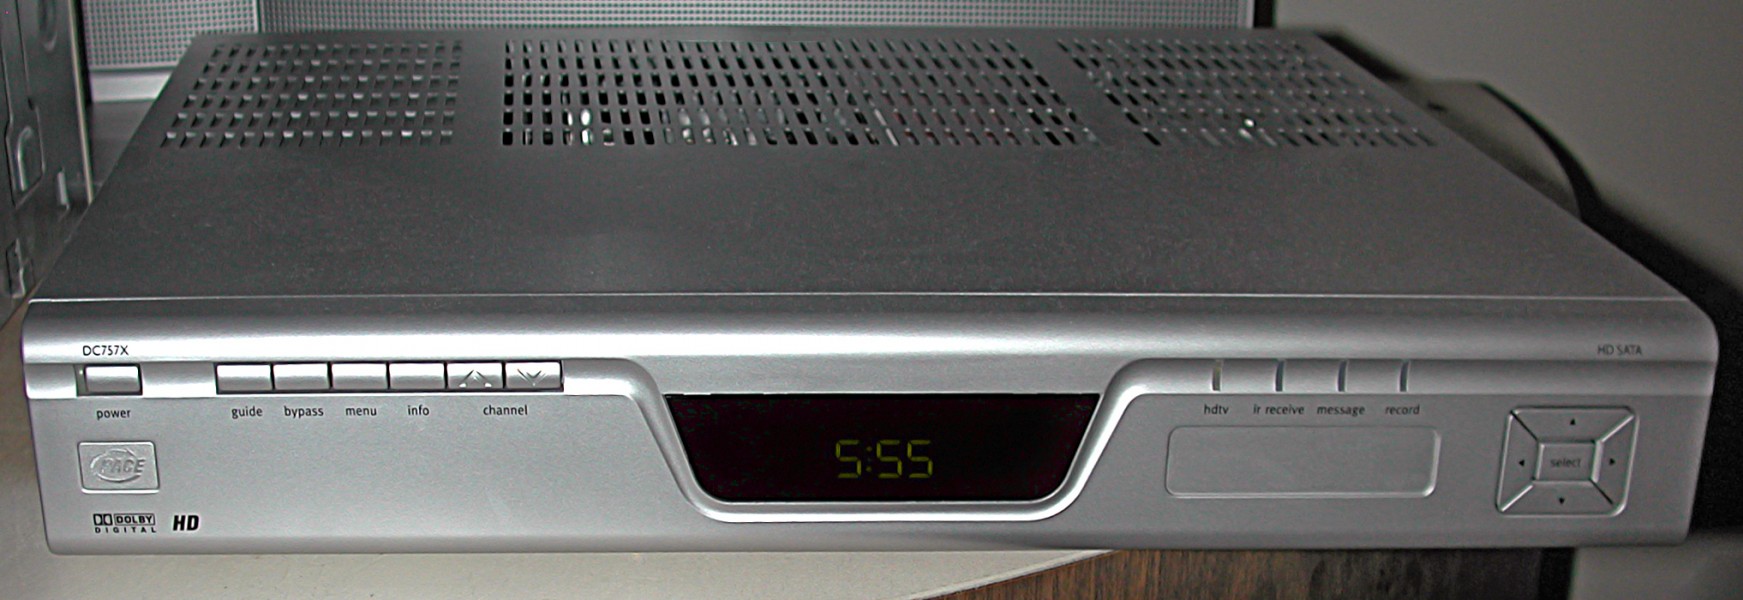 Pace DC757X cable box mod